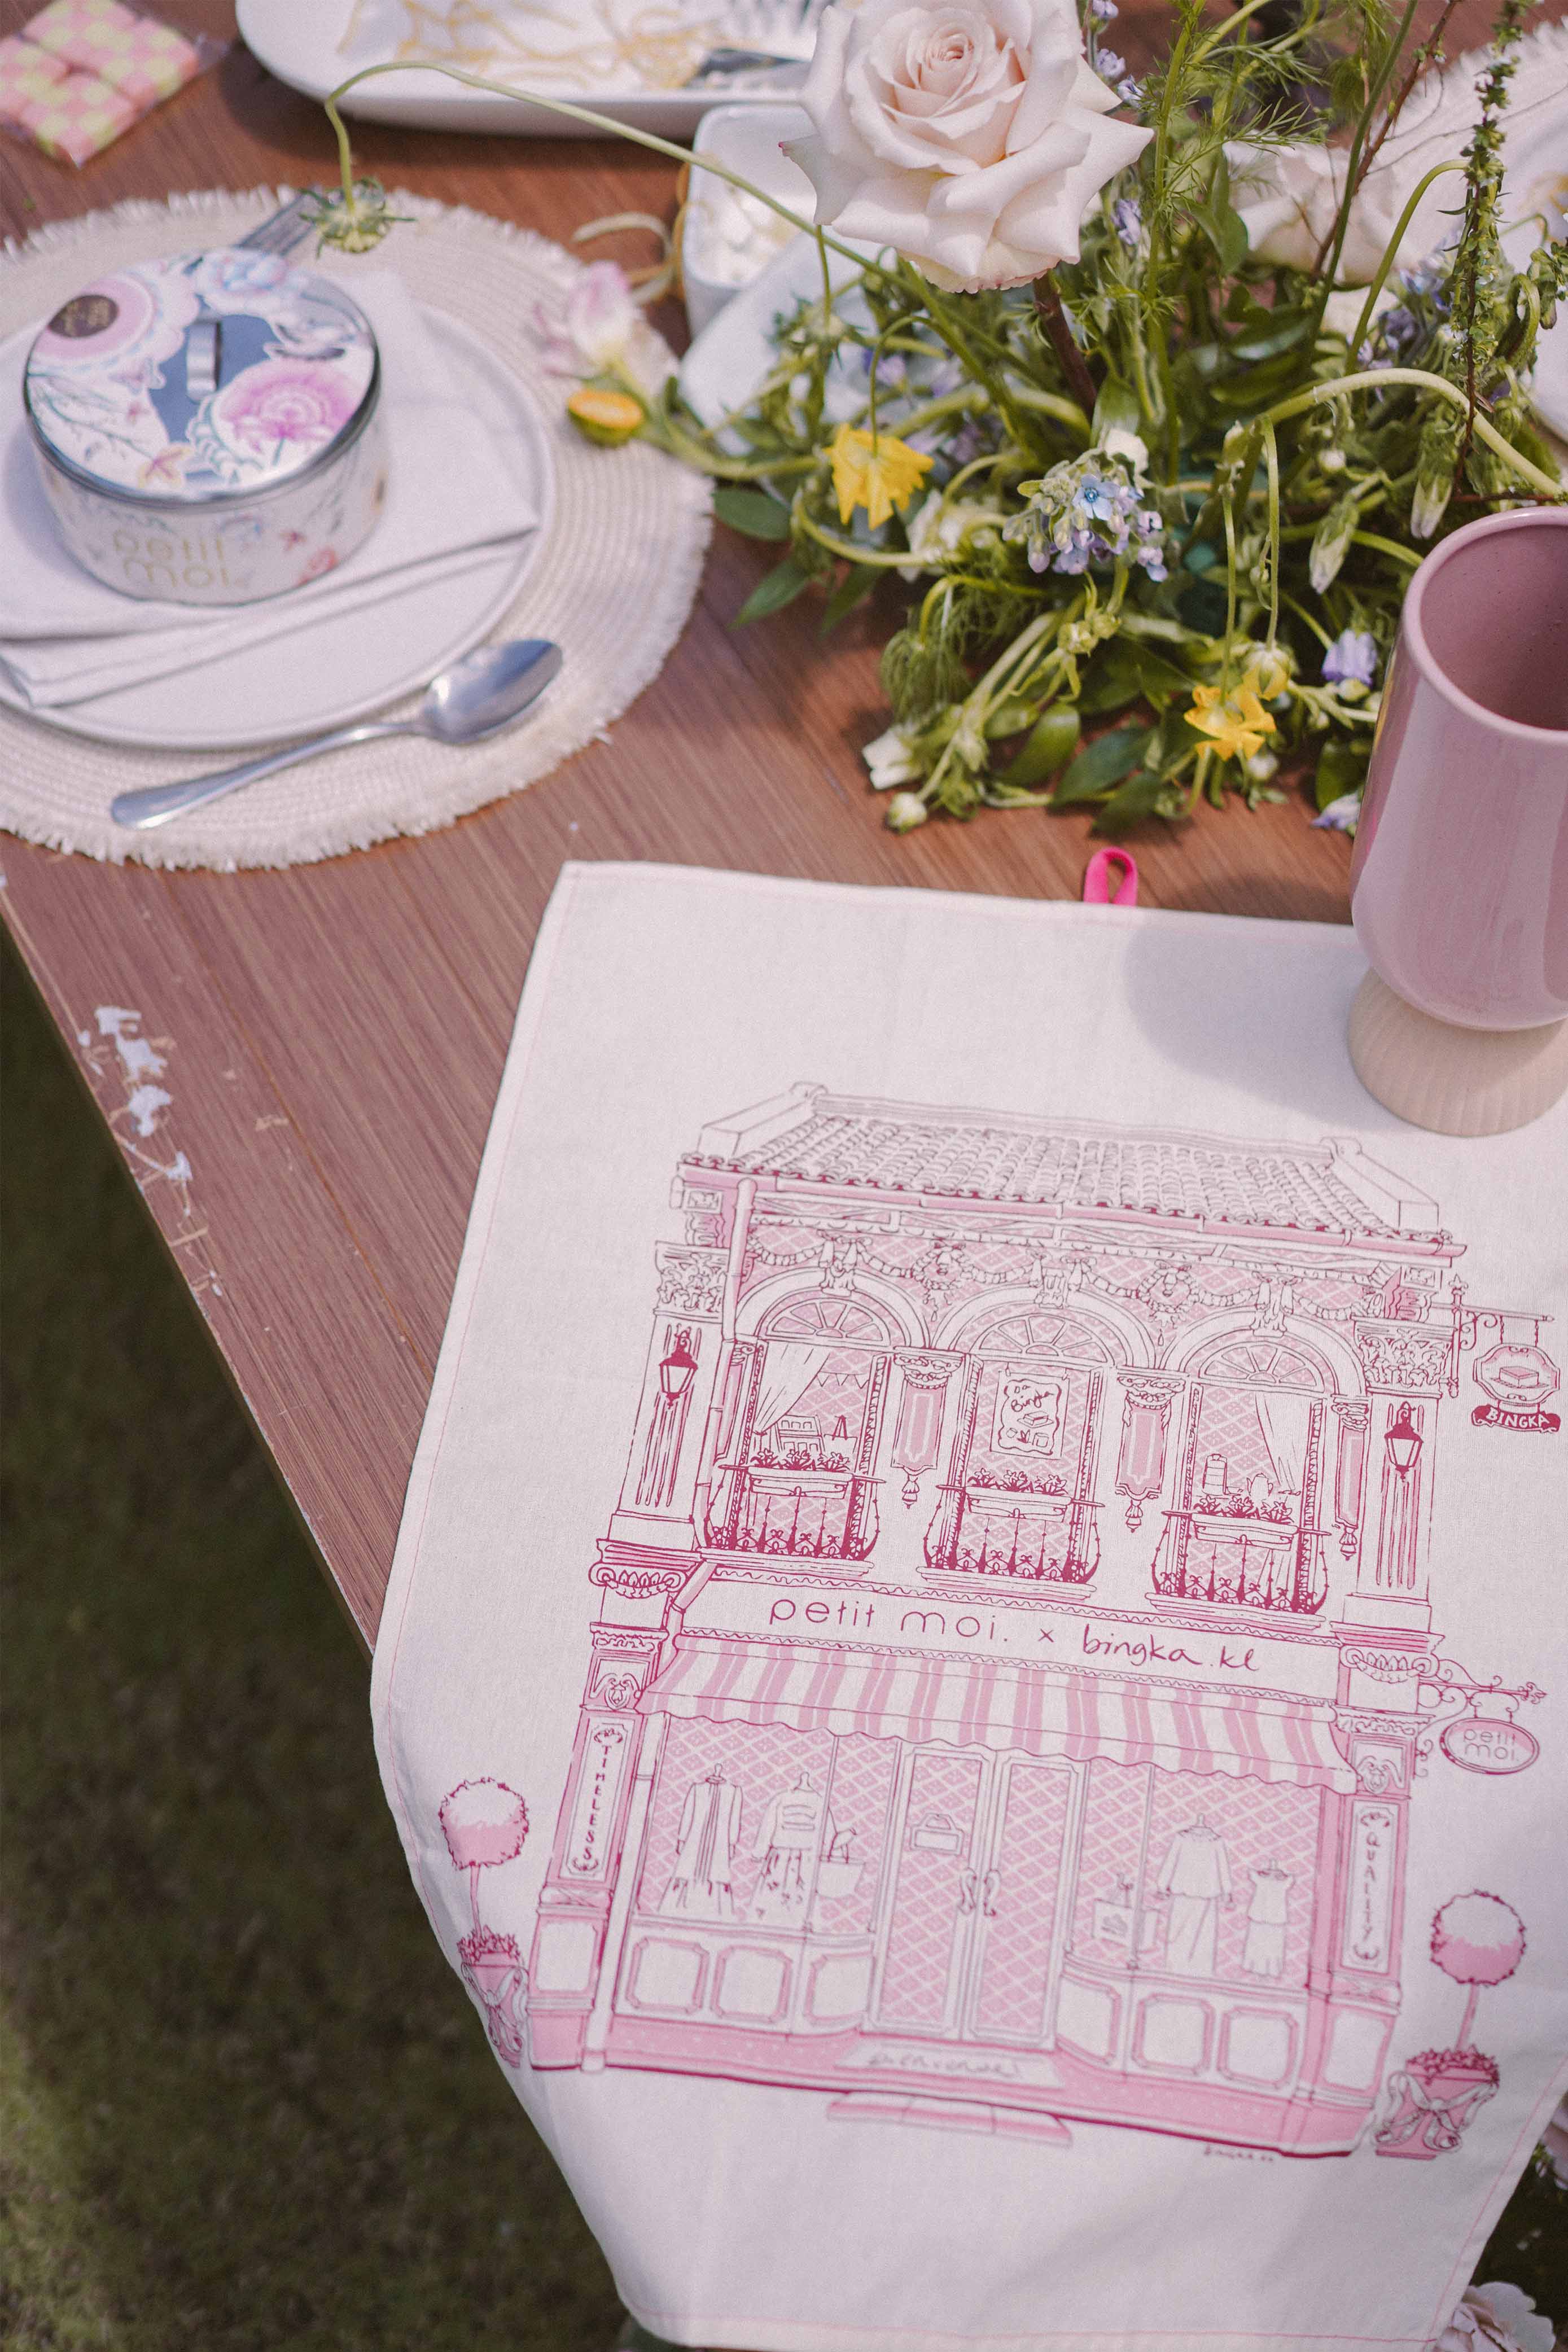 Petit Moi pink bingka tea towel and cup on table